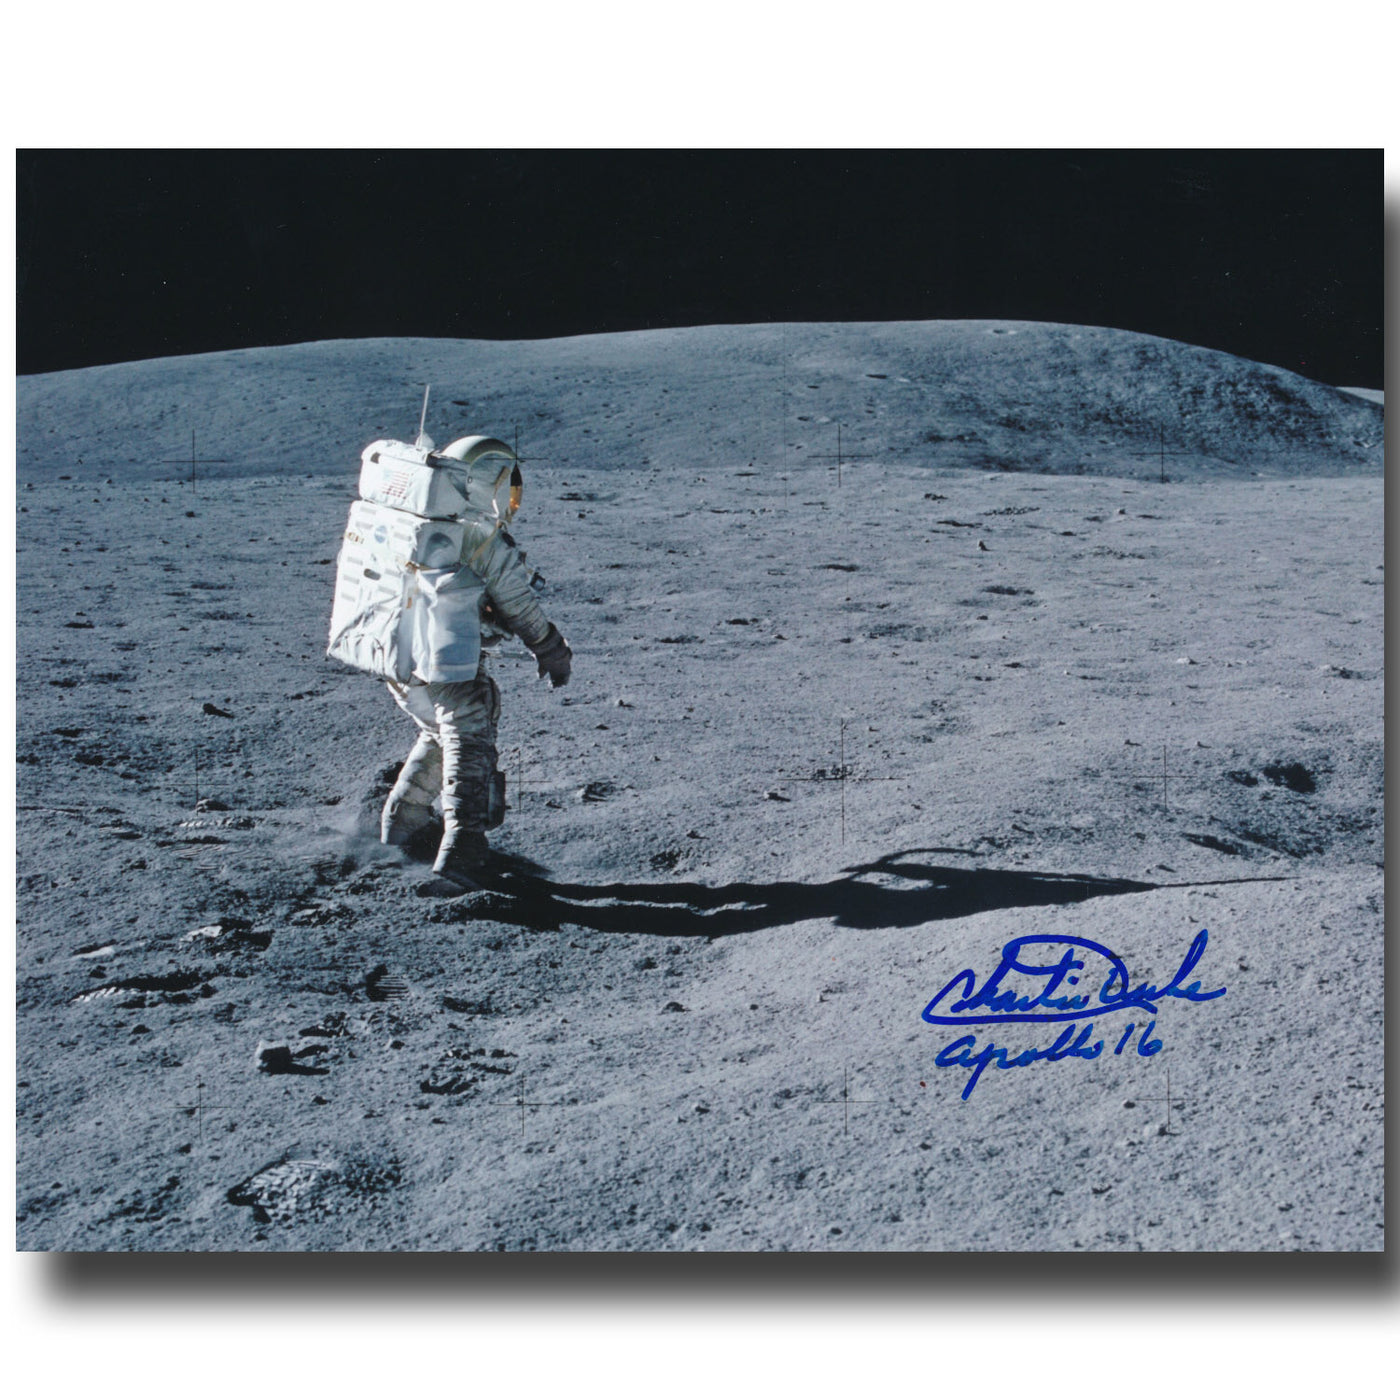 Charlie Duke – Apollo 16 moonwalk